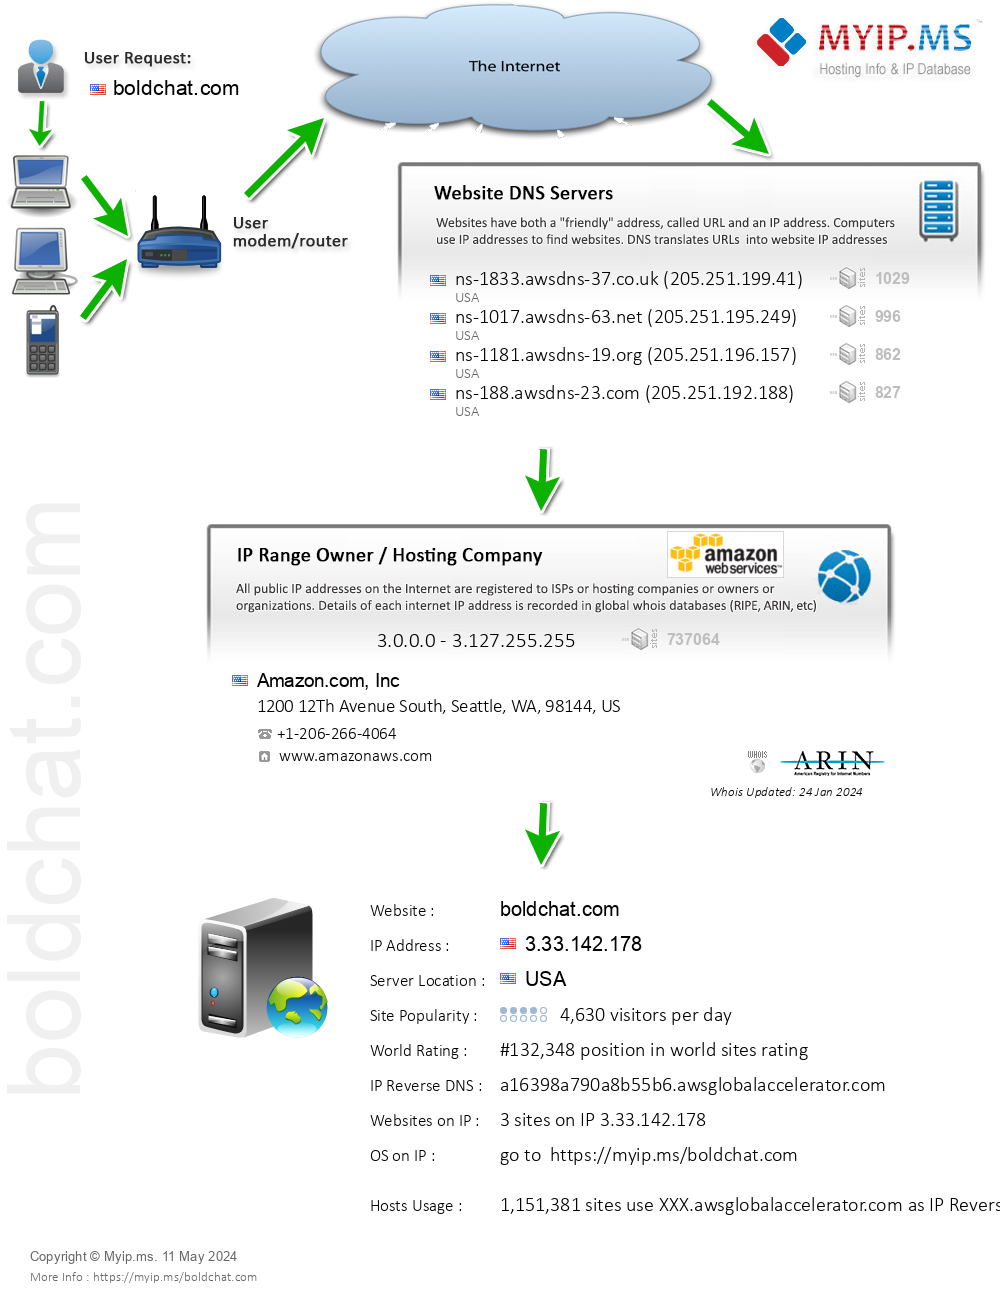 Boldchat.com - Website Hosting Visual IP Diagram